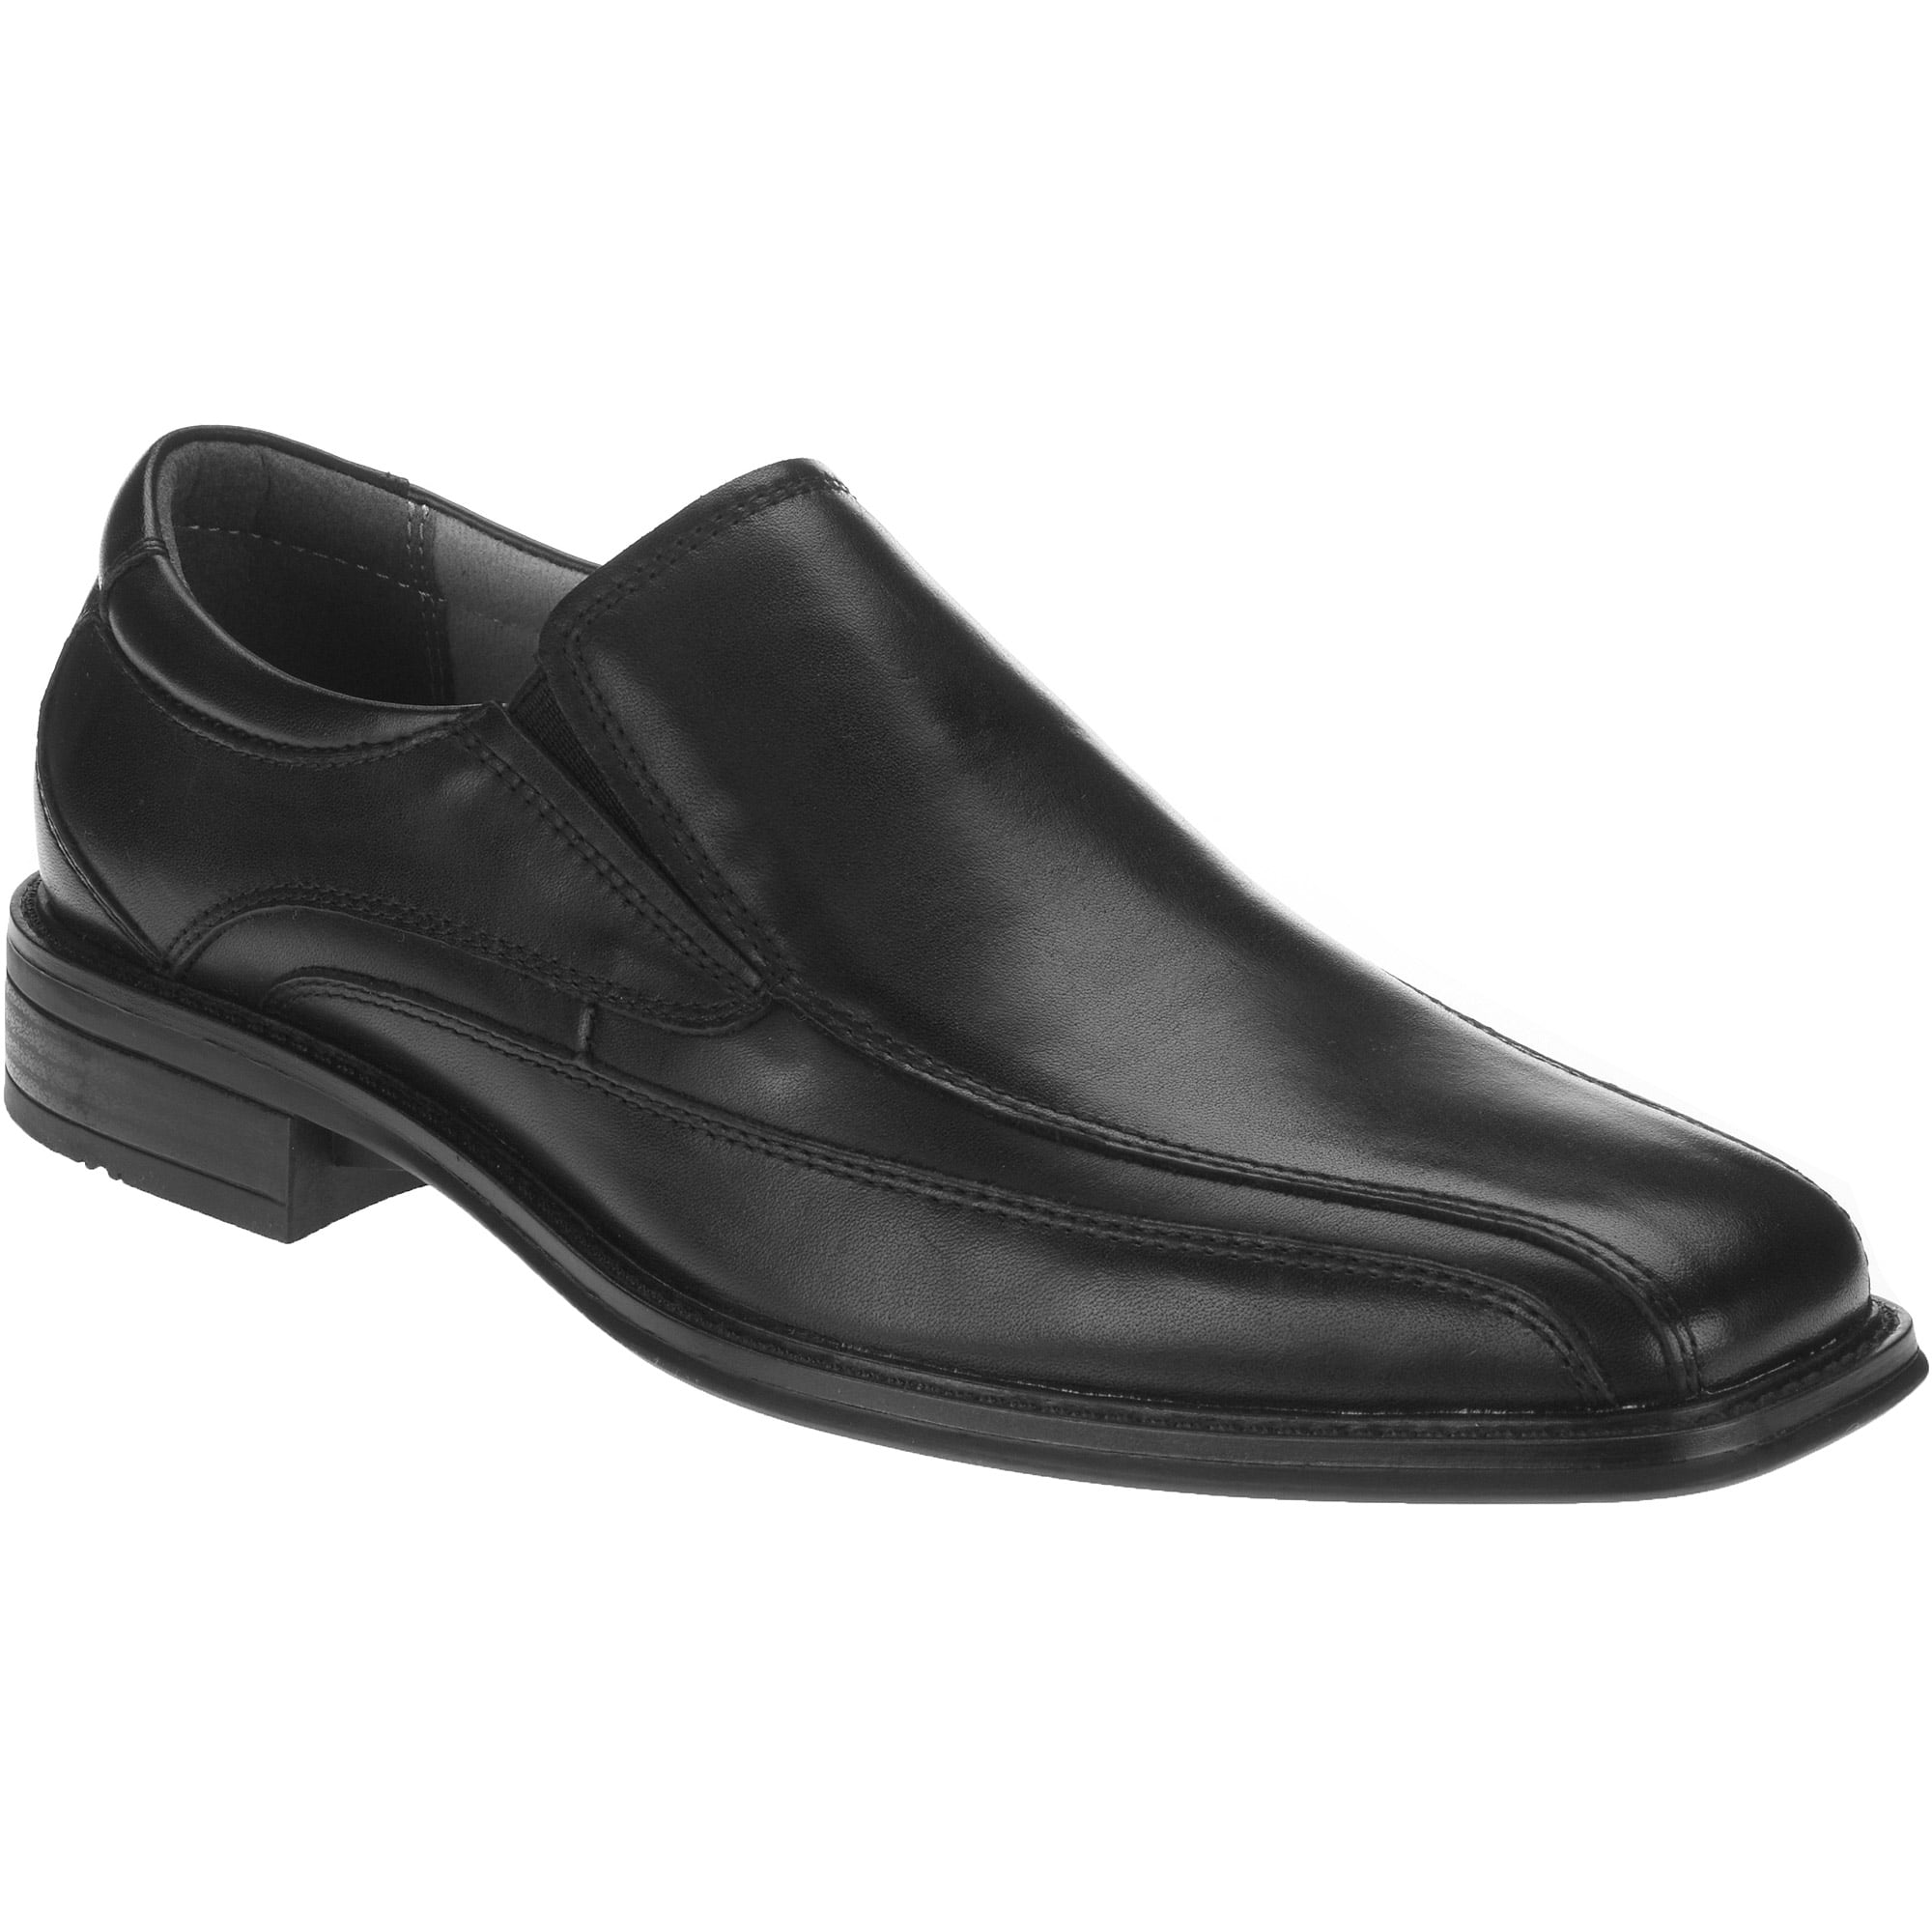 black dress shoes mens walmart